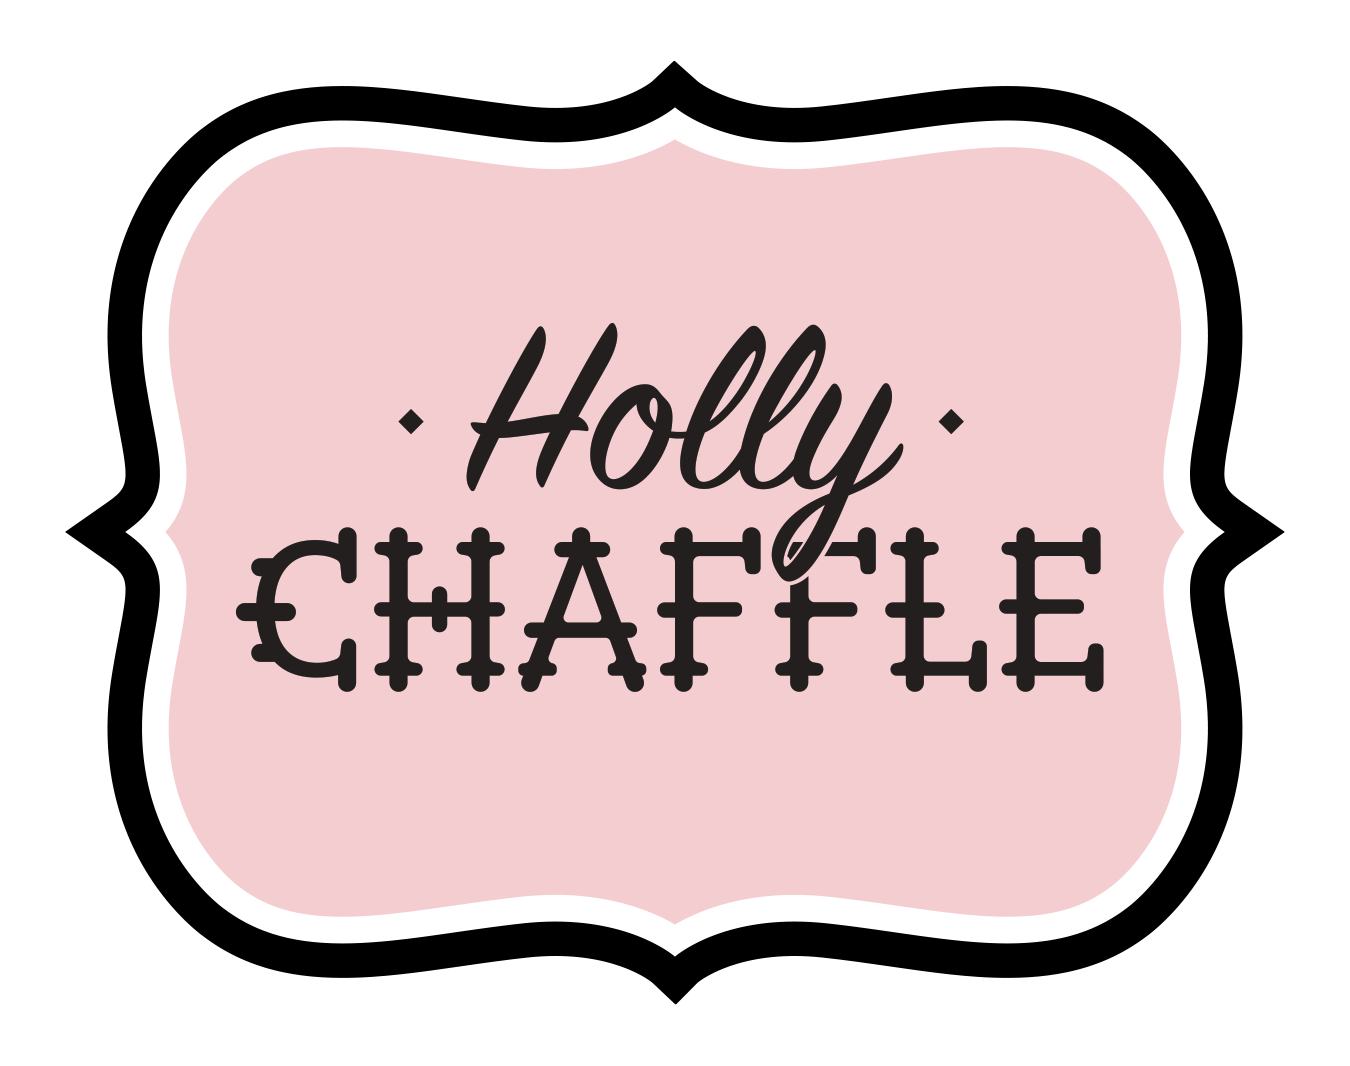 Holly Chaffle Peach Inside